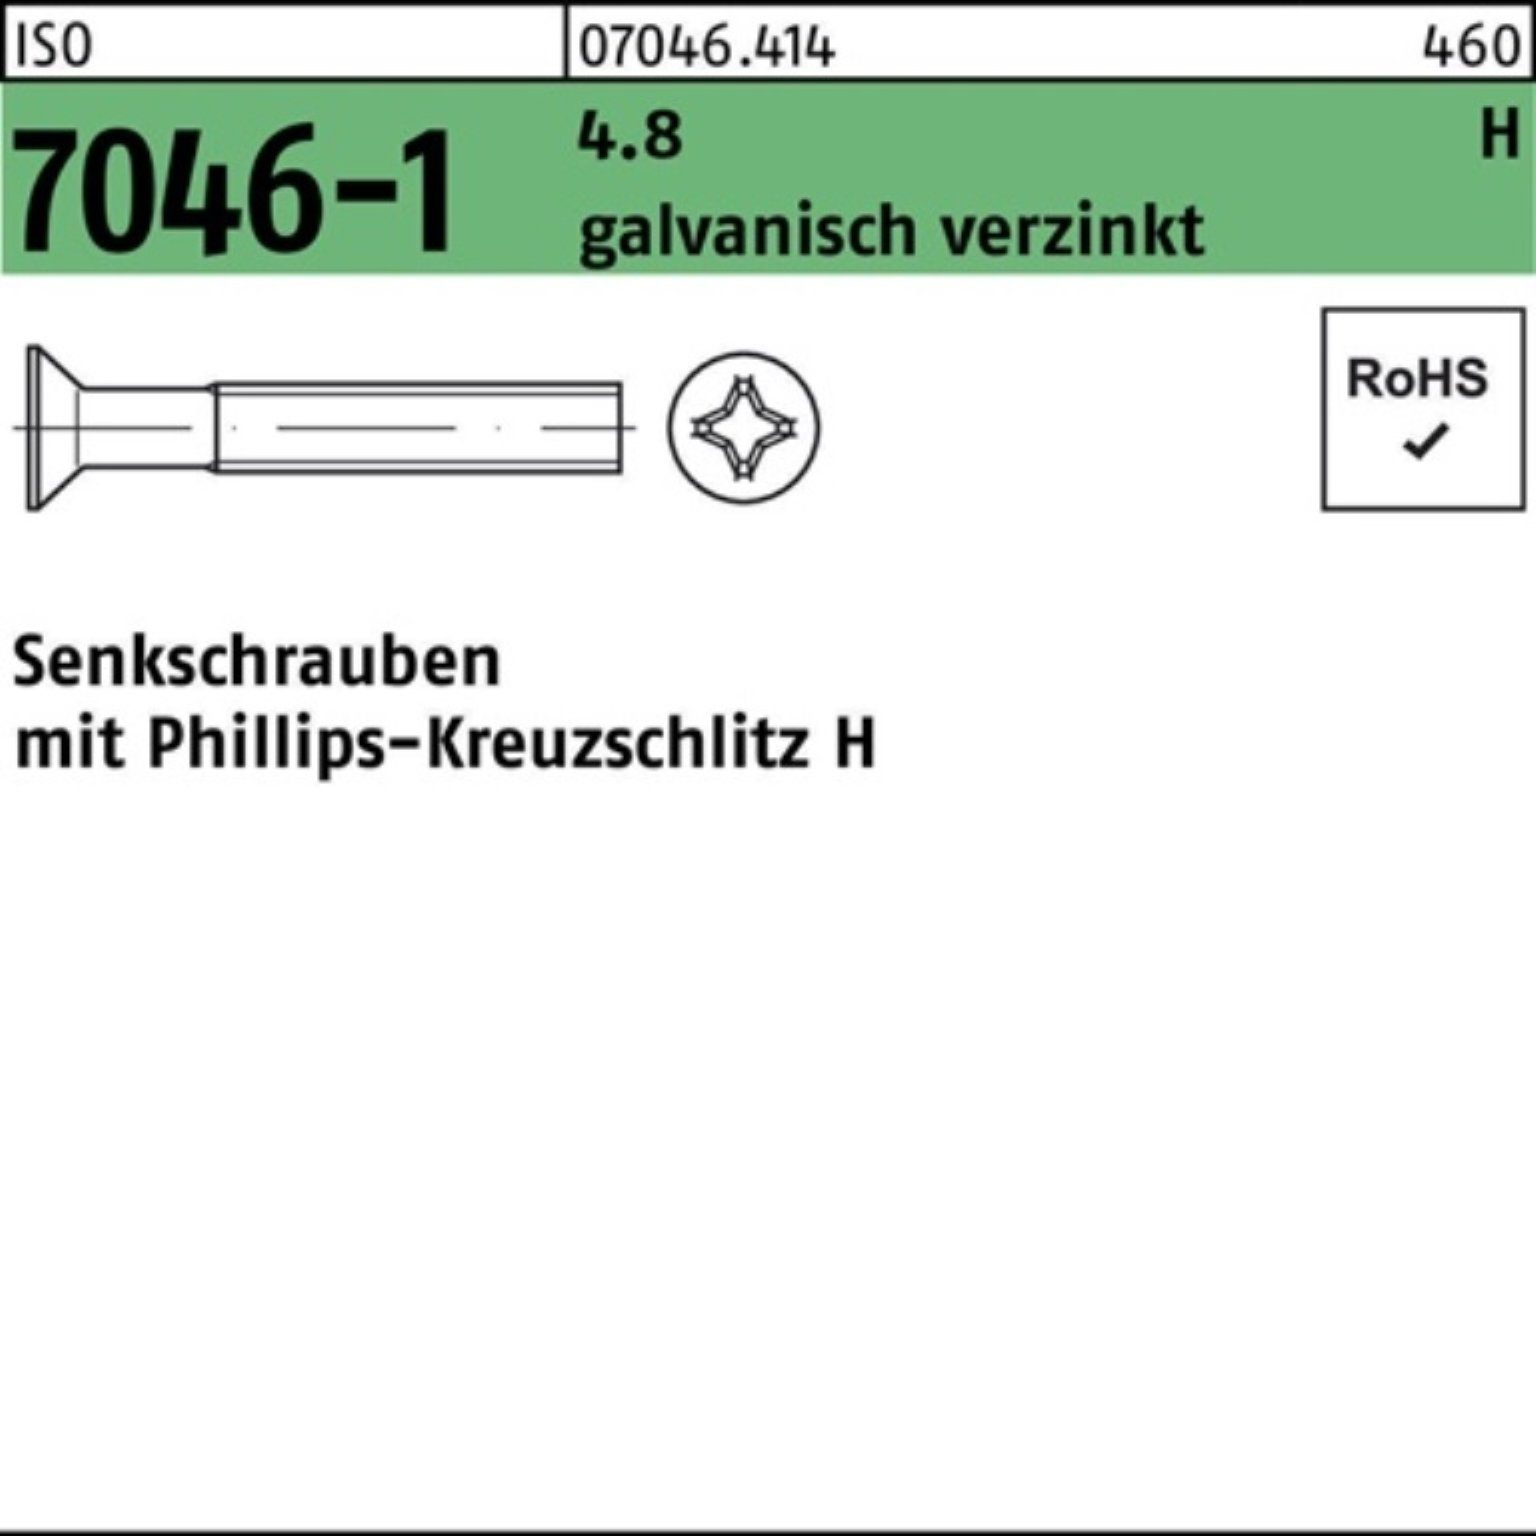 I ISO Senkschraube Pack Reyher 100St. 4.8 M10x25-H Senkschraube PH 100er 7046-1 galv.verz.